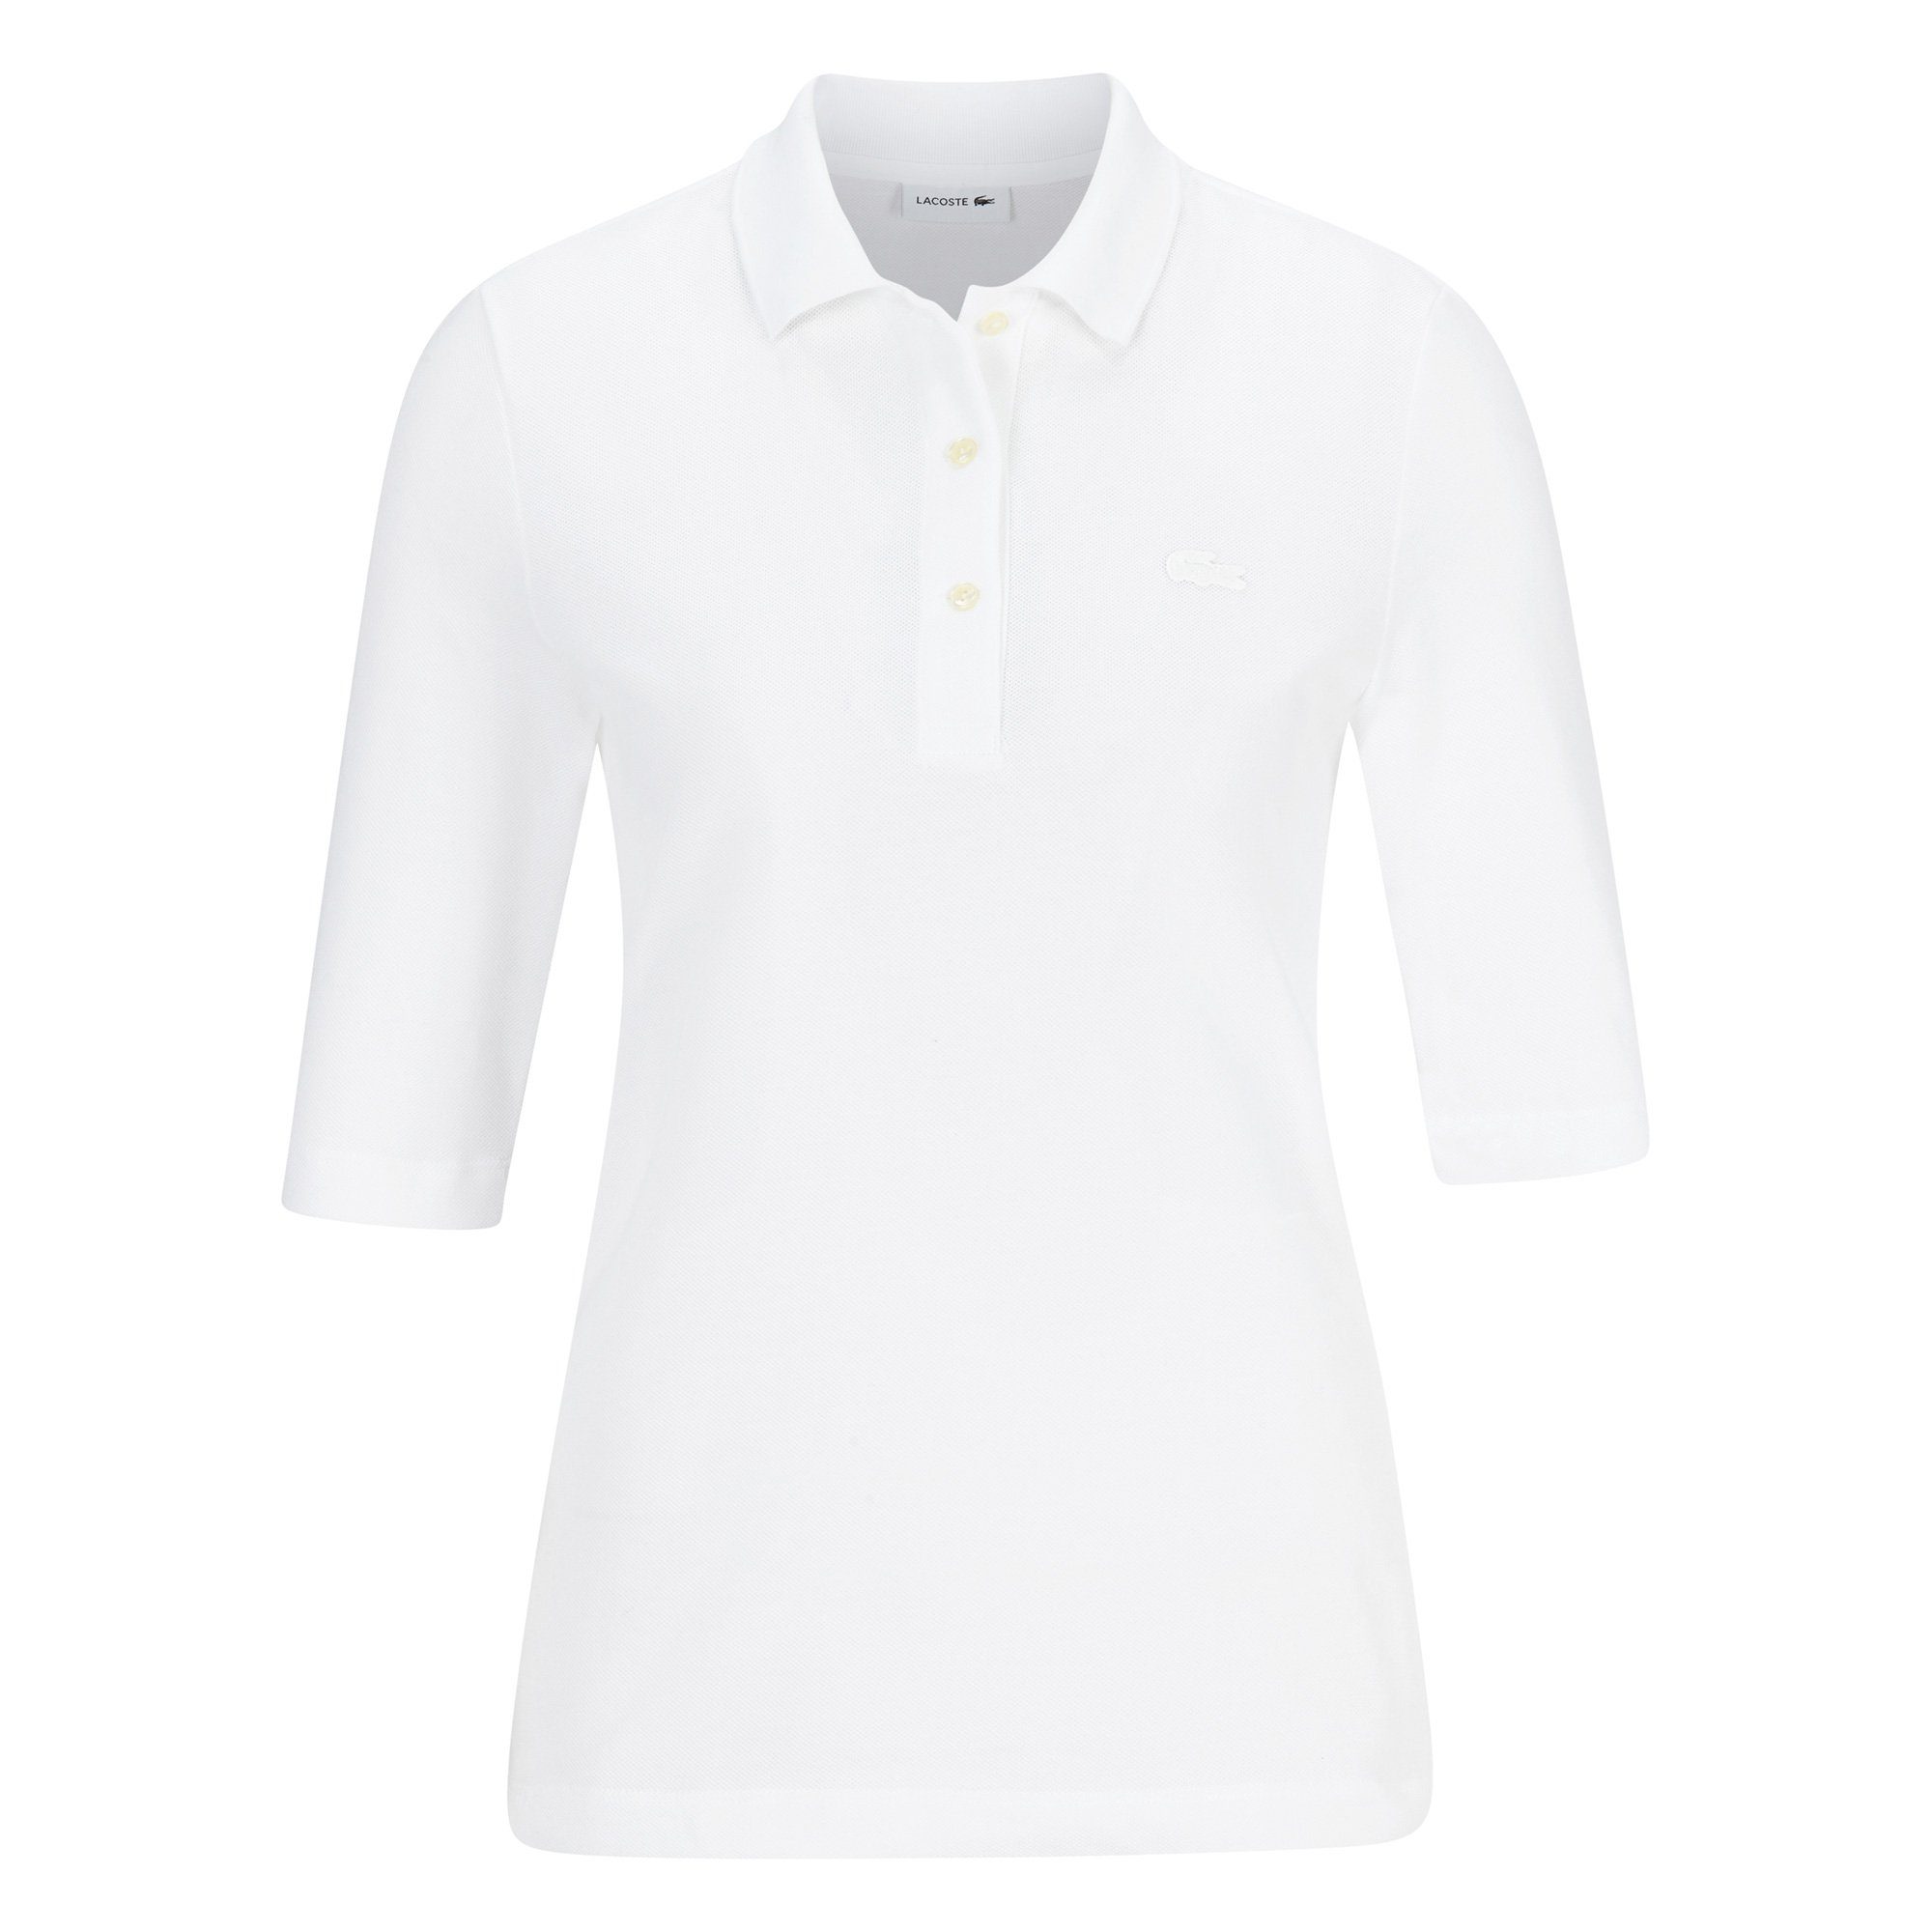 Lacoste Damen Poloshirts online kaufen » Polohemden | OTTO